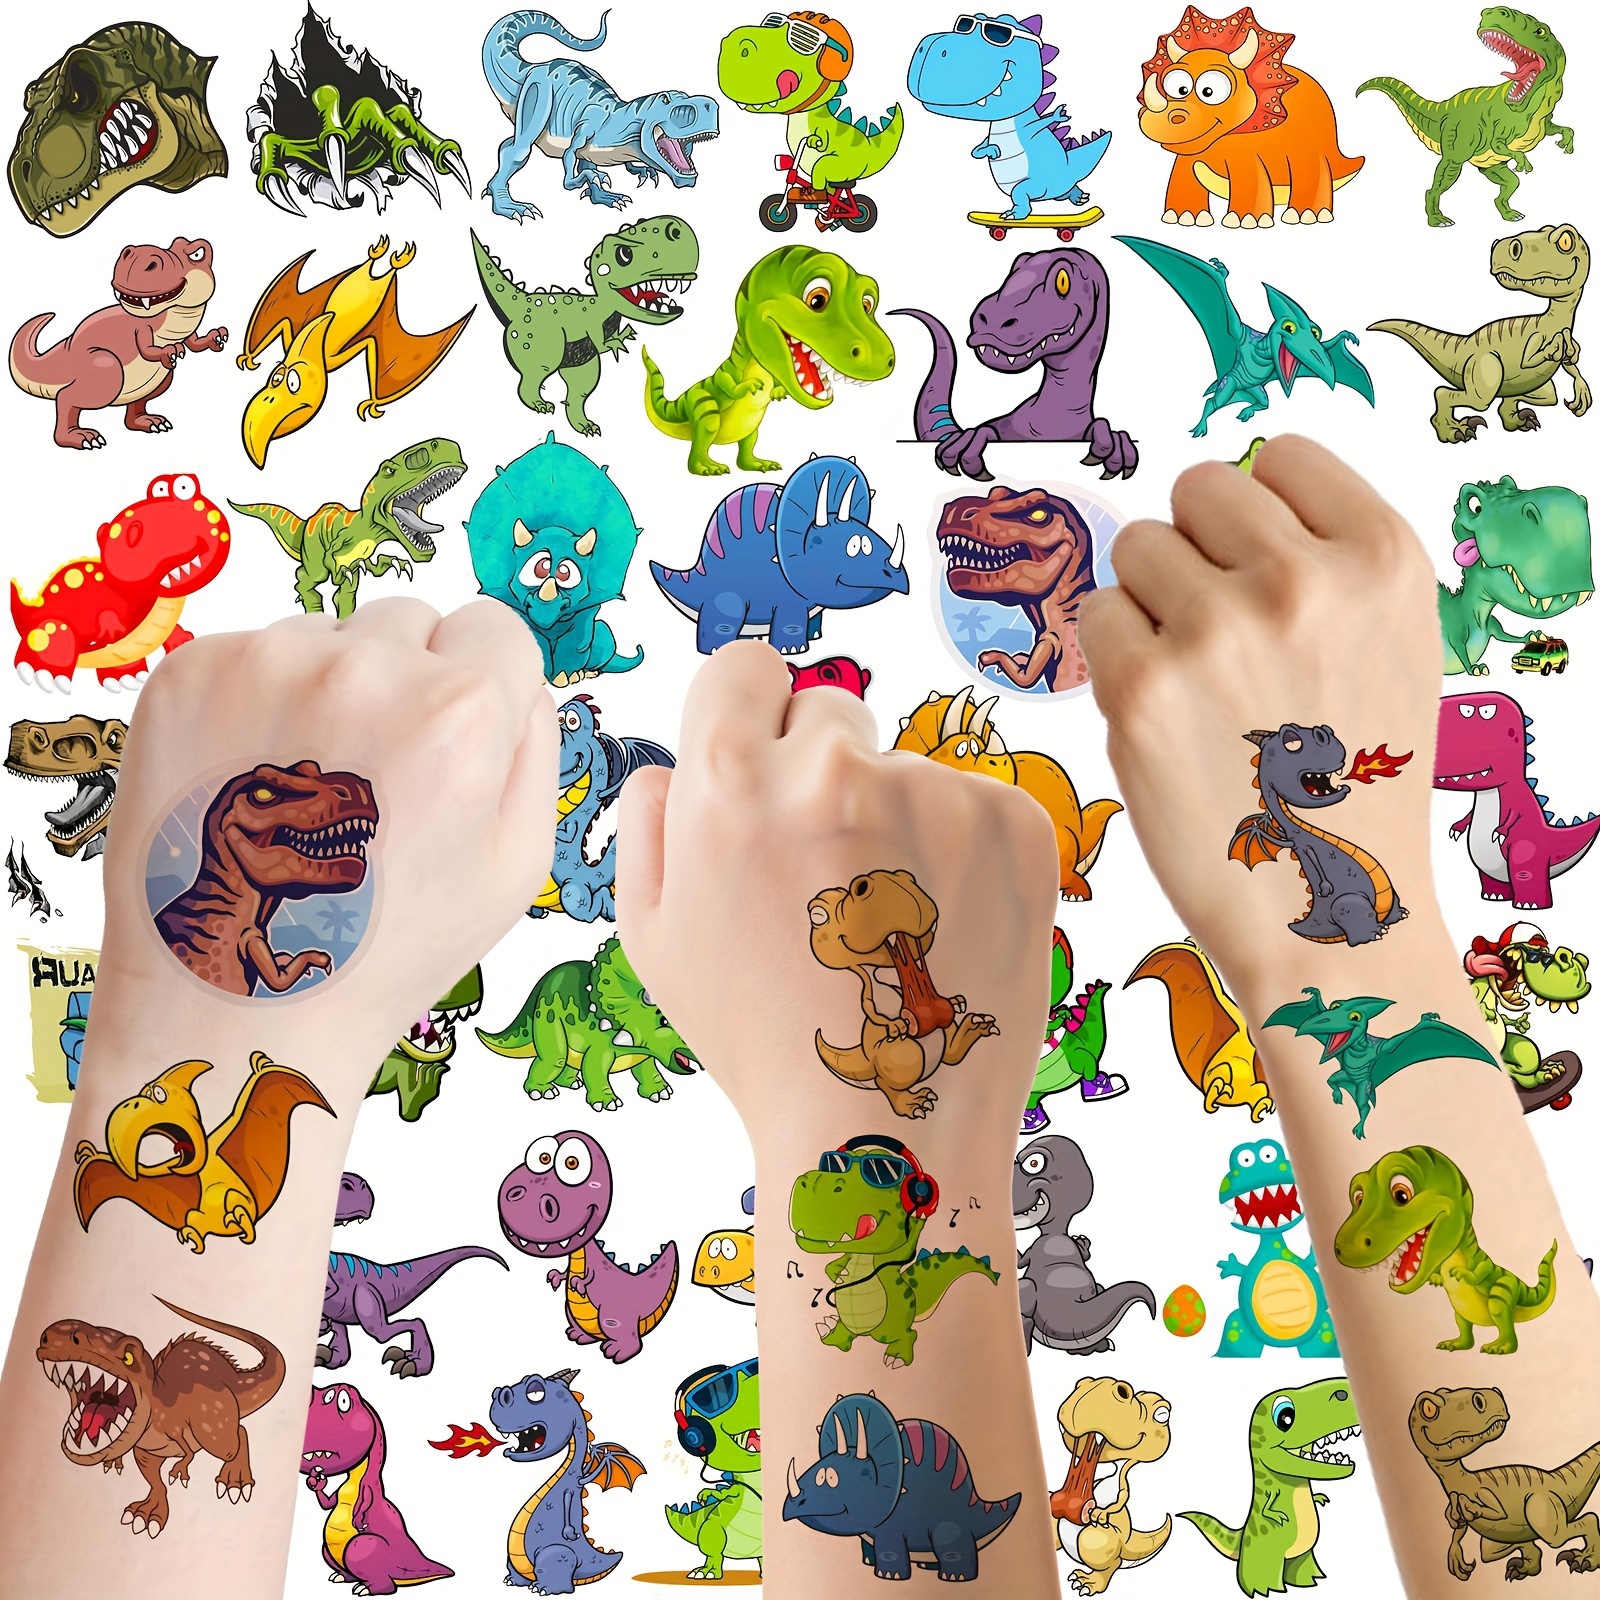 

50 Pcs 3d Dinosaur Temporary Tattoos For Boys Girls Women Men, Cute Fun T-rex Fake Face Tattoo Sticker Sets Party Decors, Bulk Small Dino Tattoos For Birthday Gifts Decoration